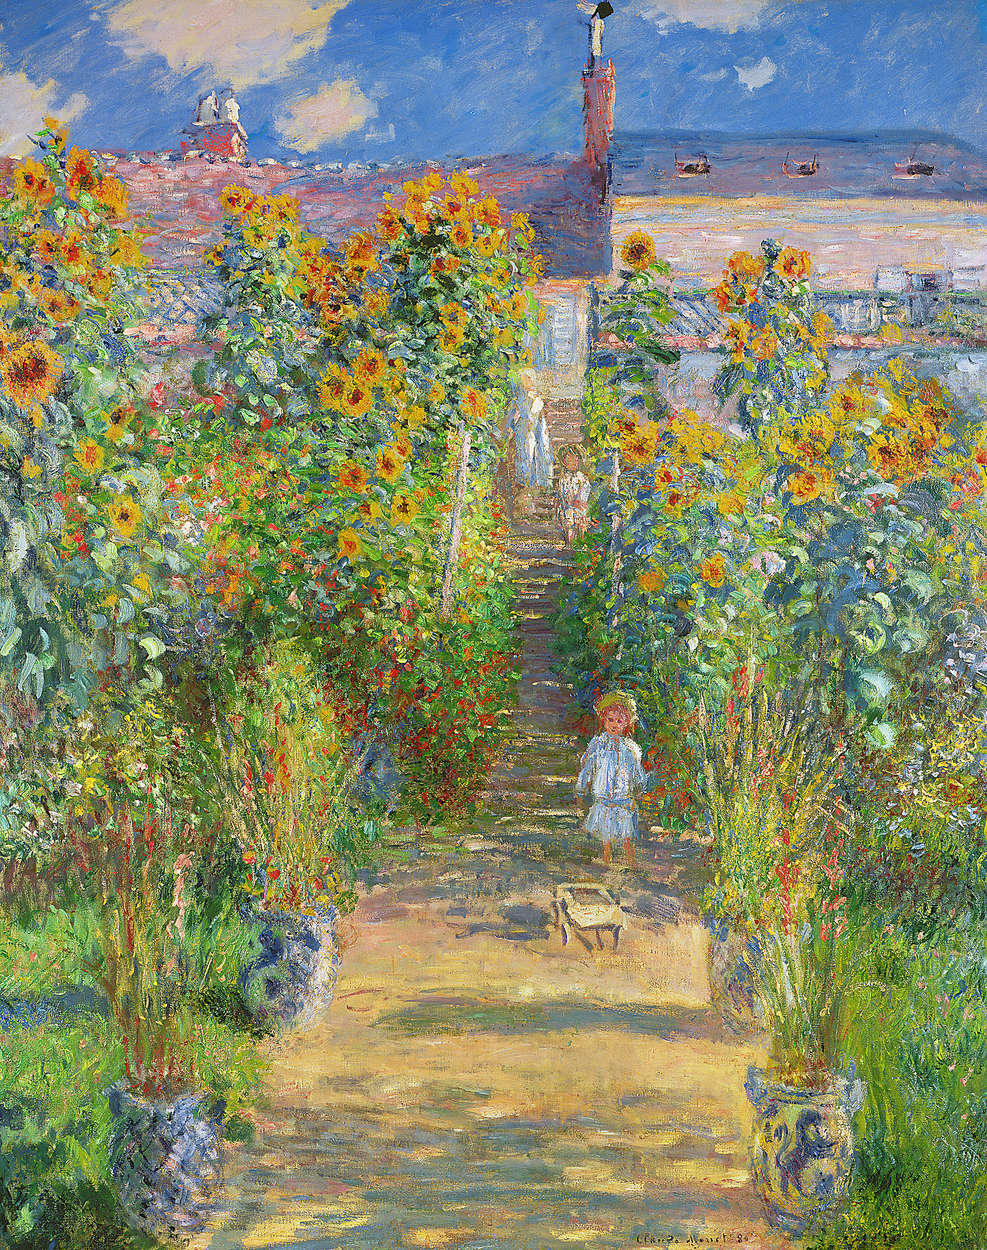             Mural "El jardín del artista en Vetheuil" de Claude Monet
        